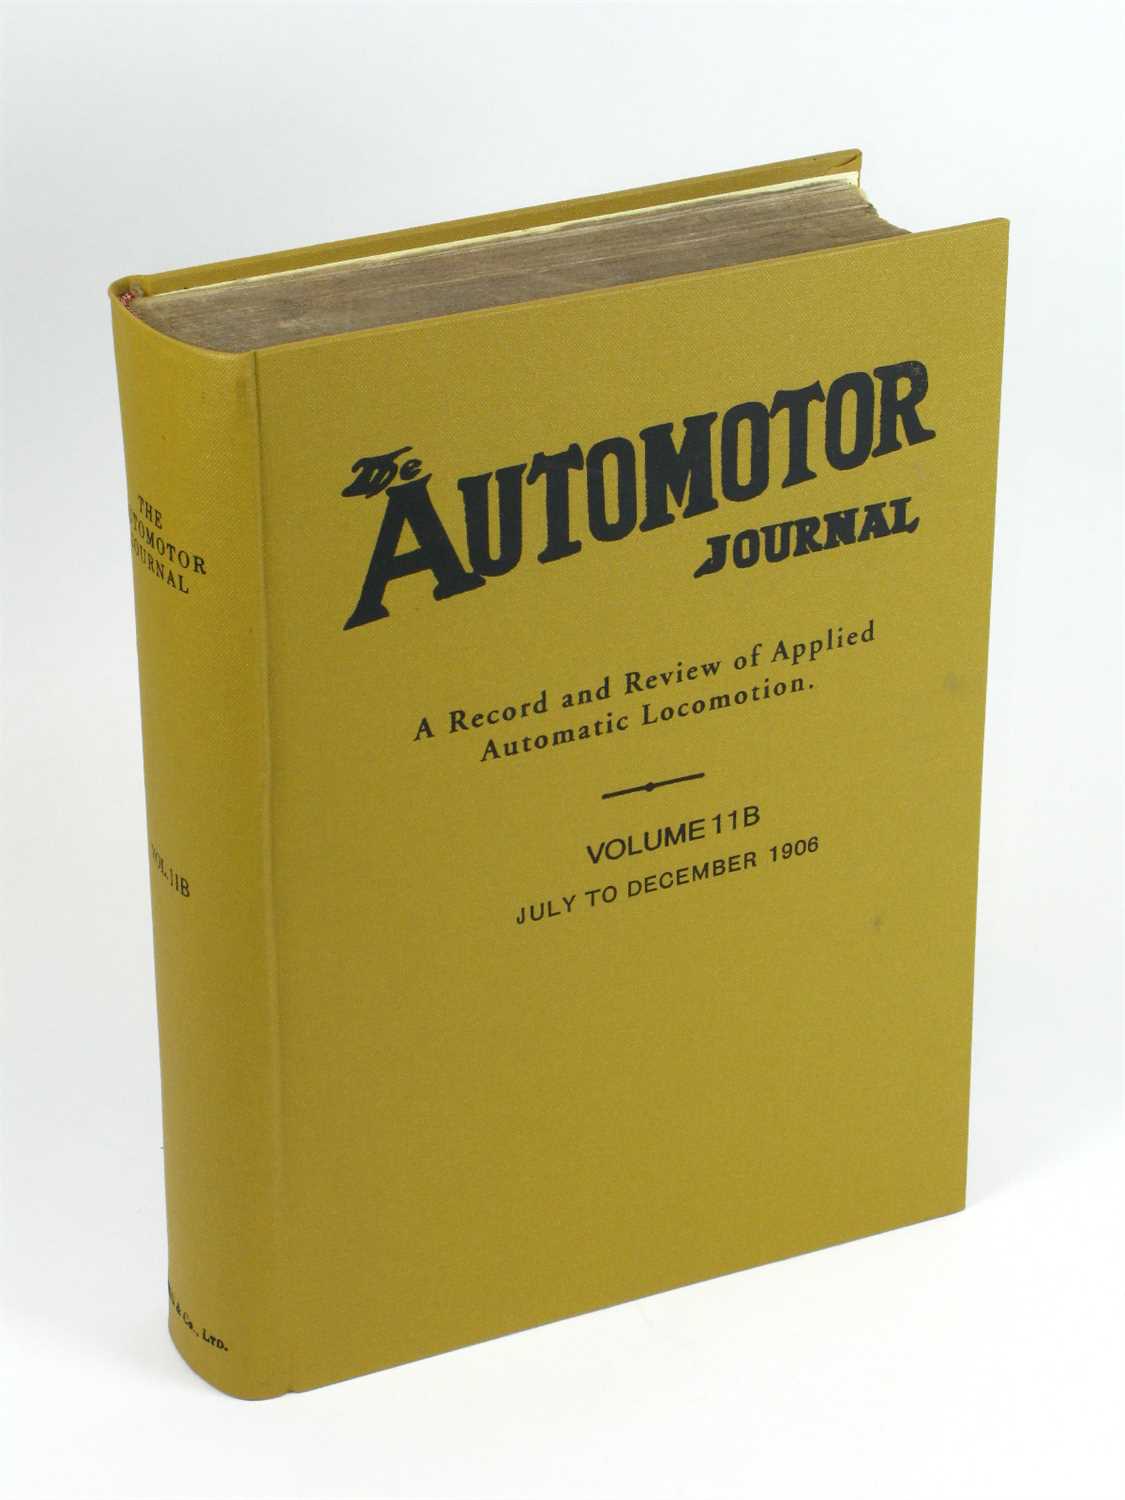 Lot 264 - Automotor Journal.